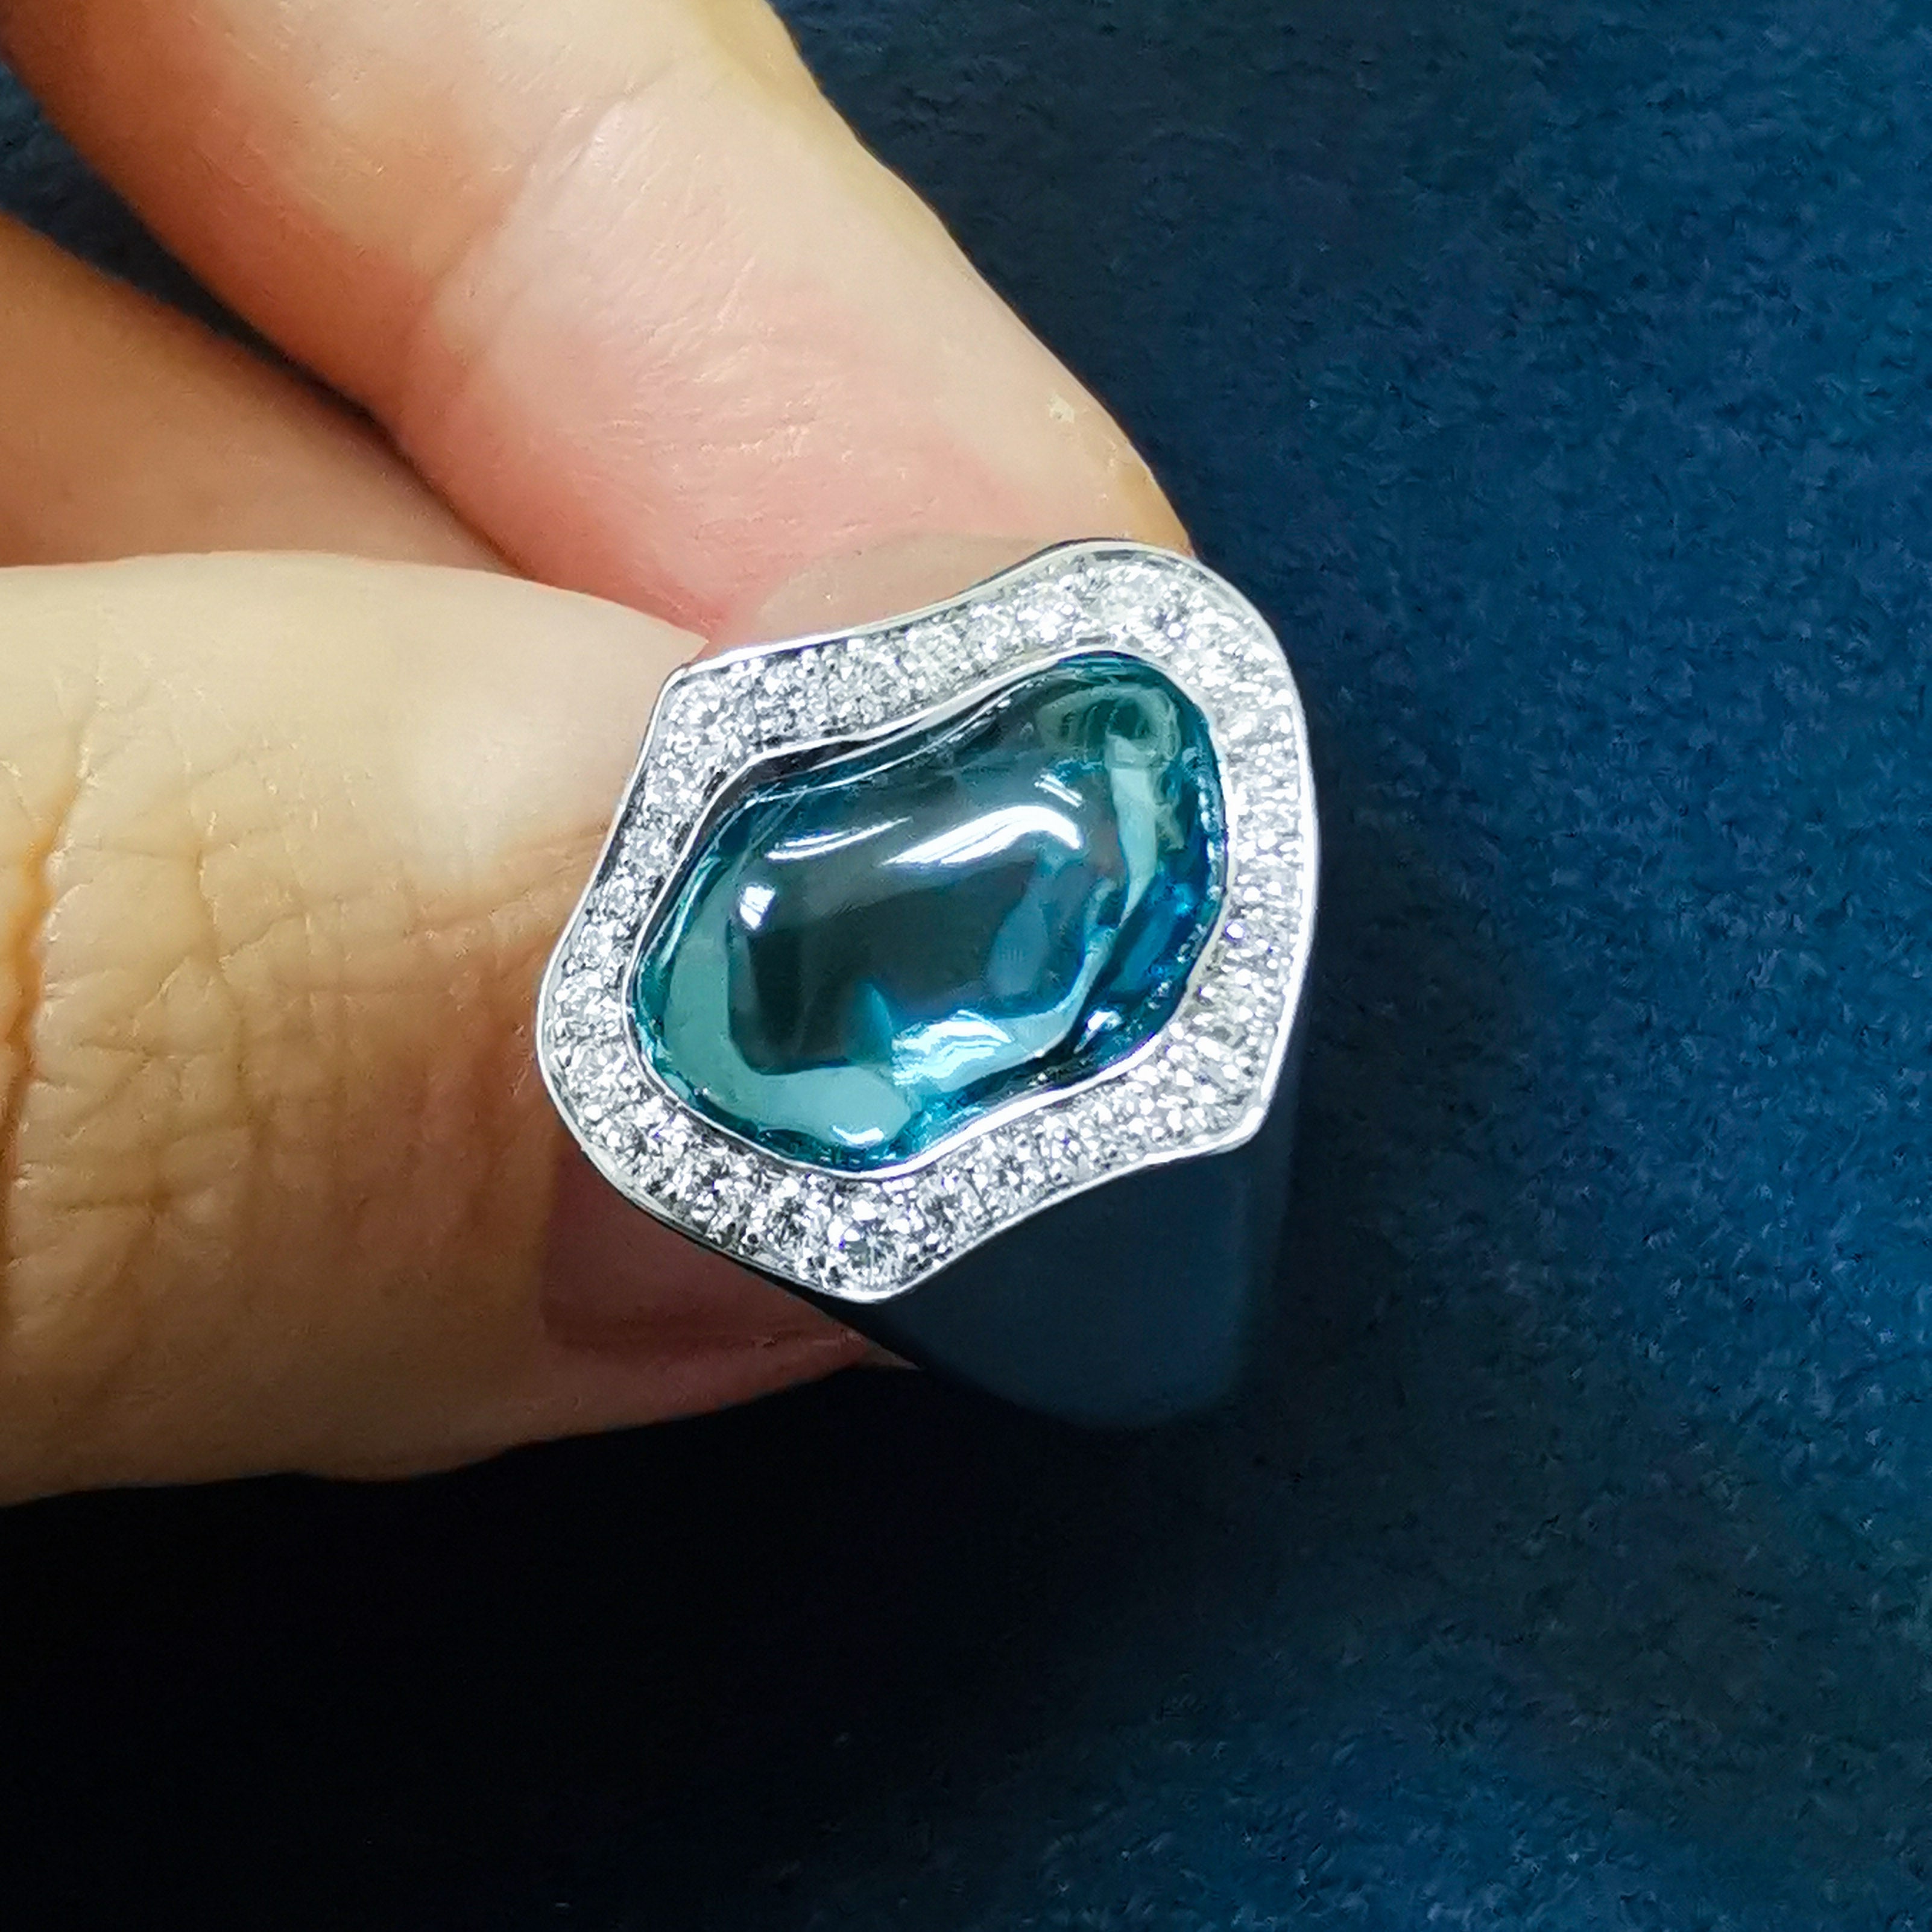 R 0030-5/1 18K White Gold, Aquamarine, Diamonds Ring